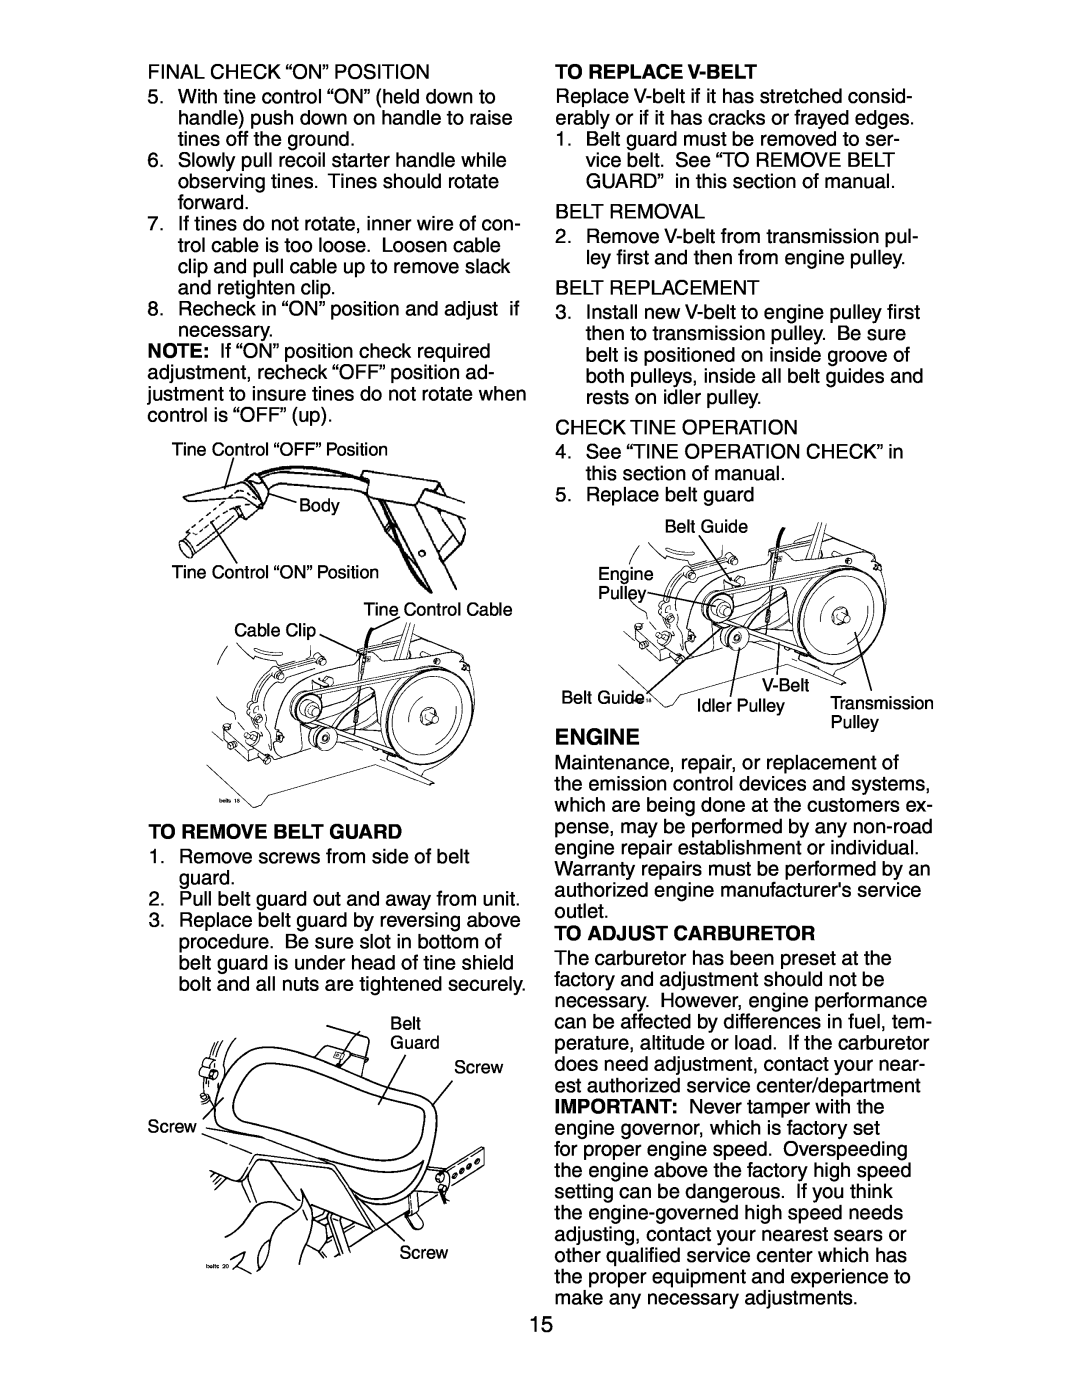 Sears 917.29149 owner manual Engine, To Remove Belt Guard, To Replace V-Belt, To Adjust Carburetor 